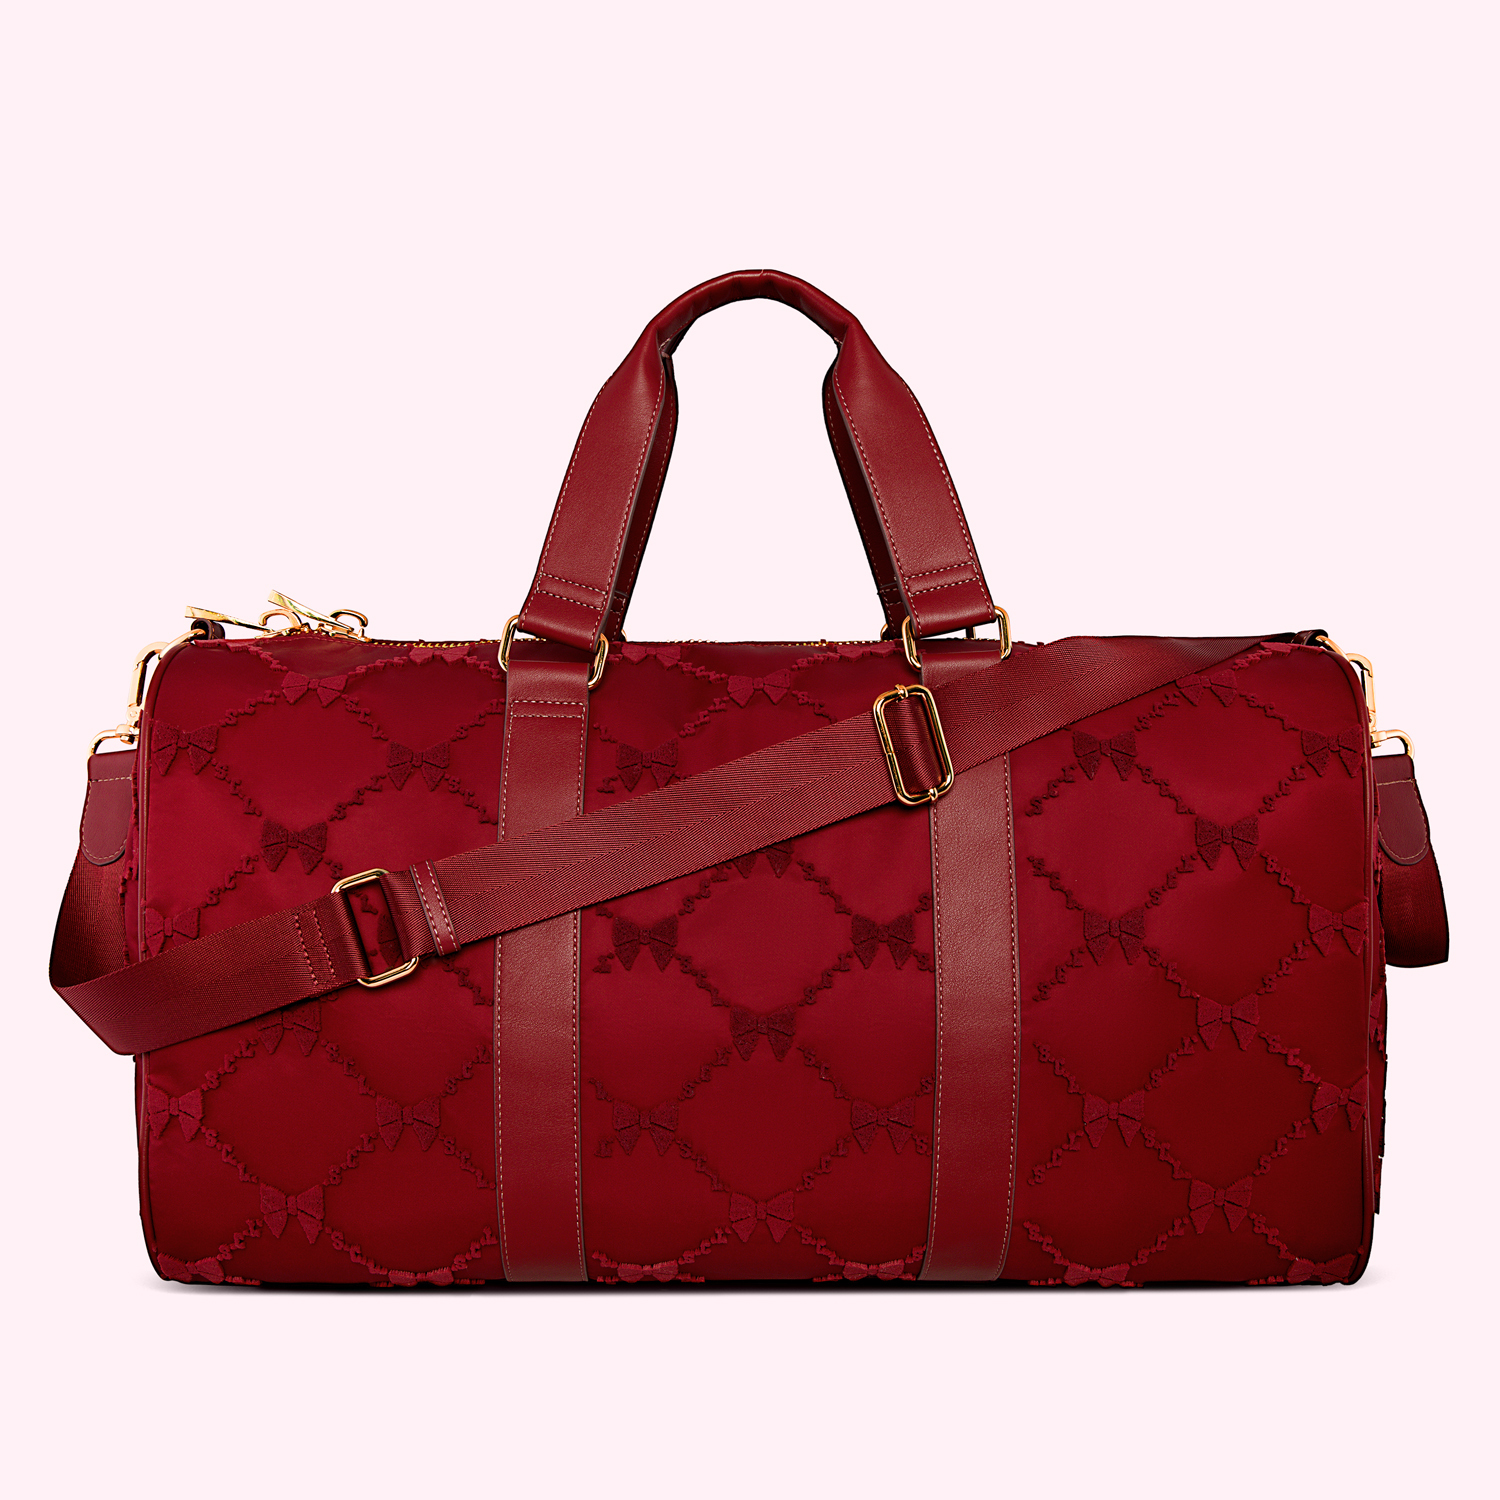 Burgundy Duffle Bag - Customizable